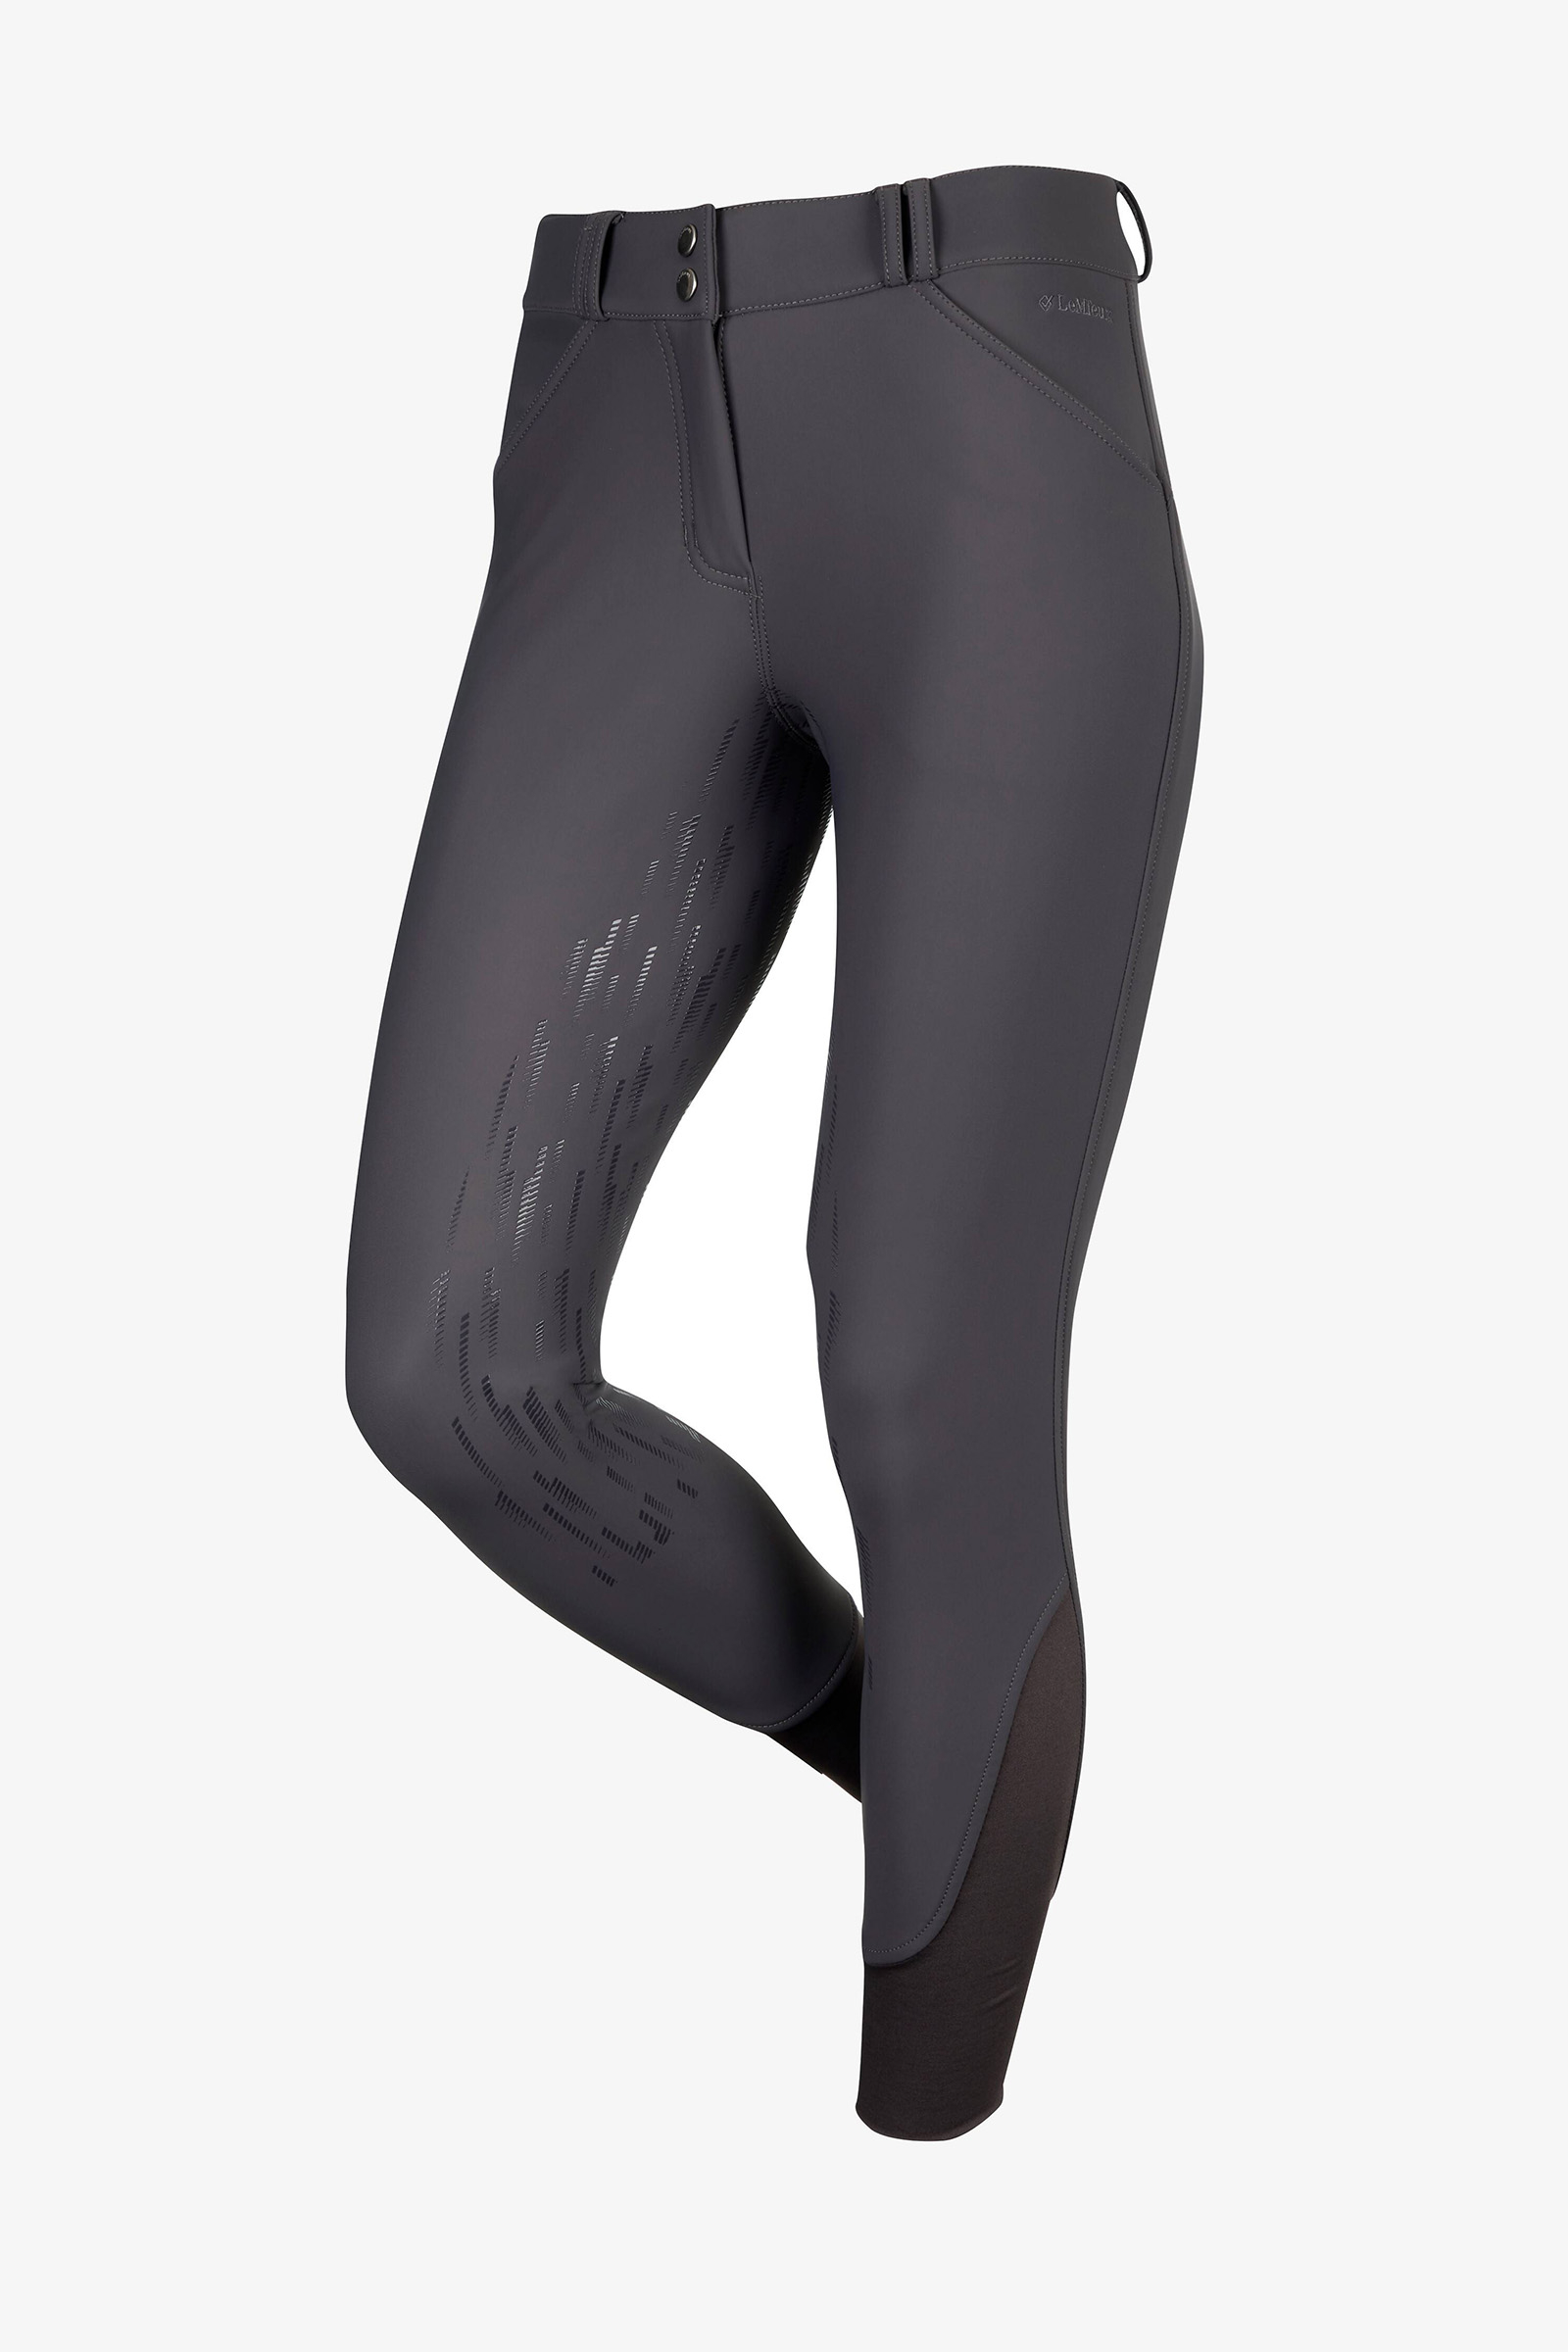 Buy Women's Waterproof Trousers, Waterproof Leggings